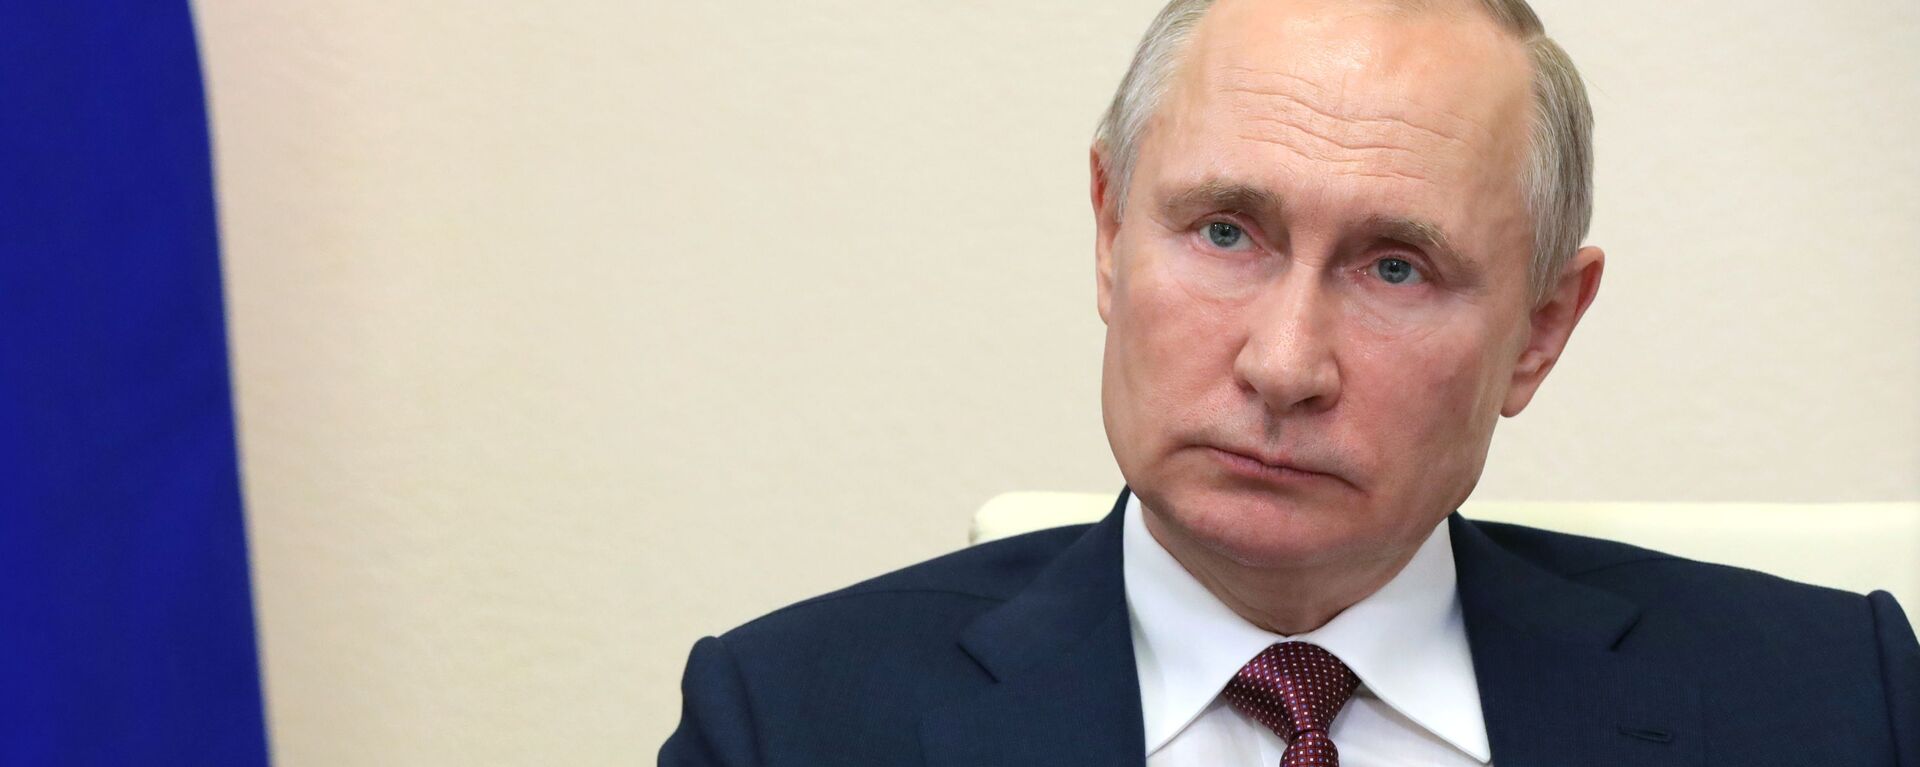 Vladímir Putin, presidente de Rusia - Sputnik Mundo, 1920, 09.04.2021